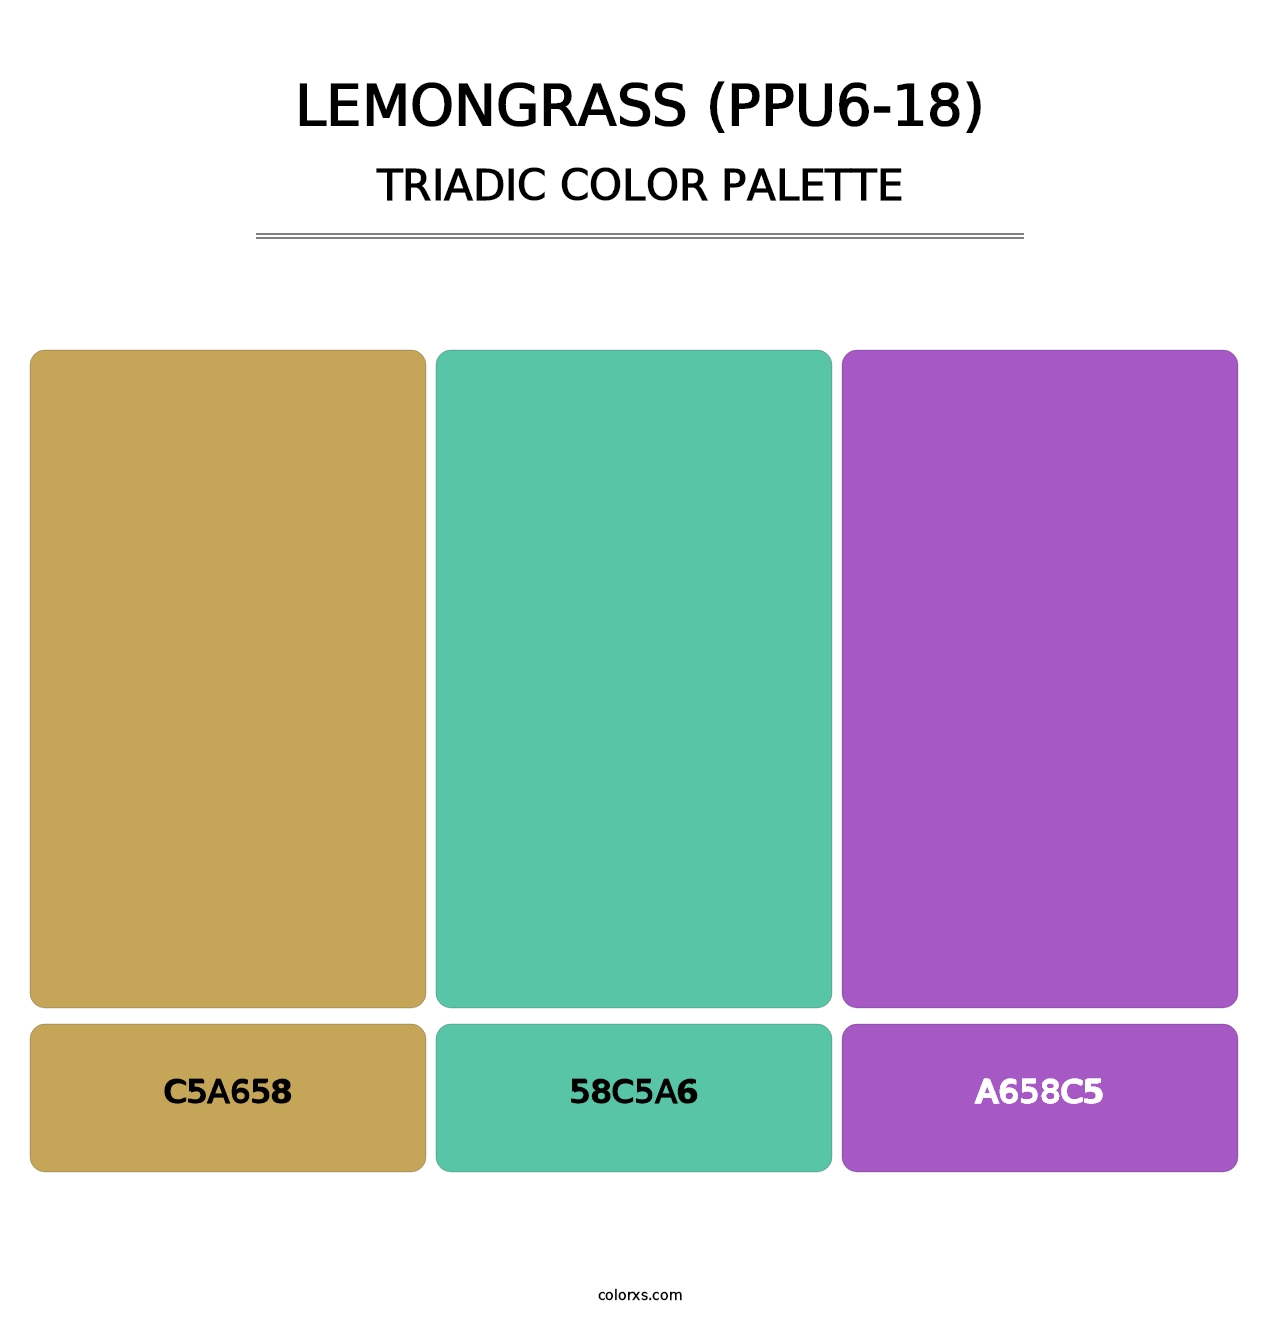 Lemongrass (PPU6-18) - Triadic Color Palette